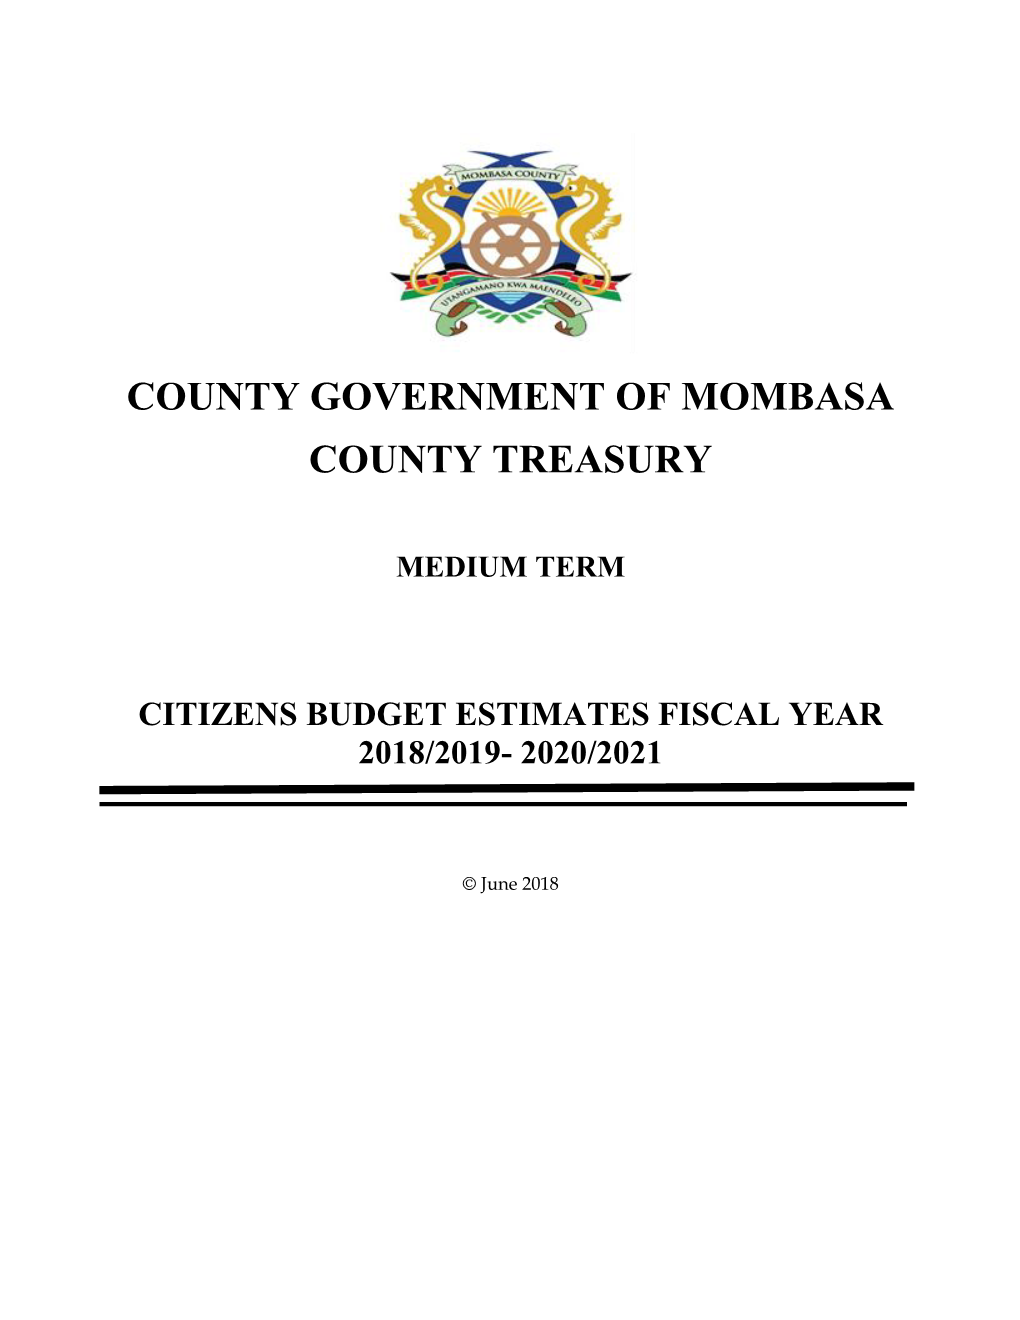 Mombasa County Citizens Budget 2018-19